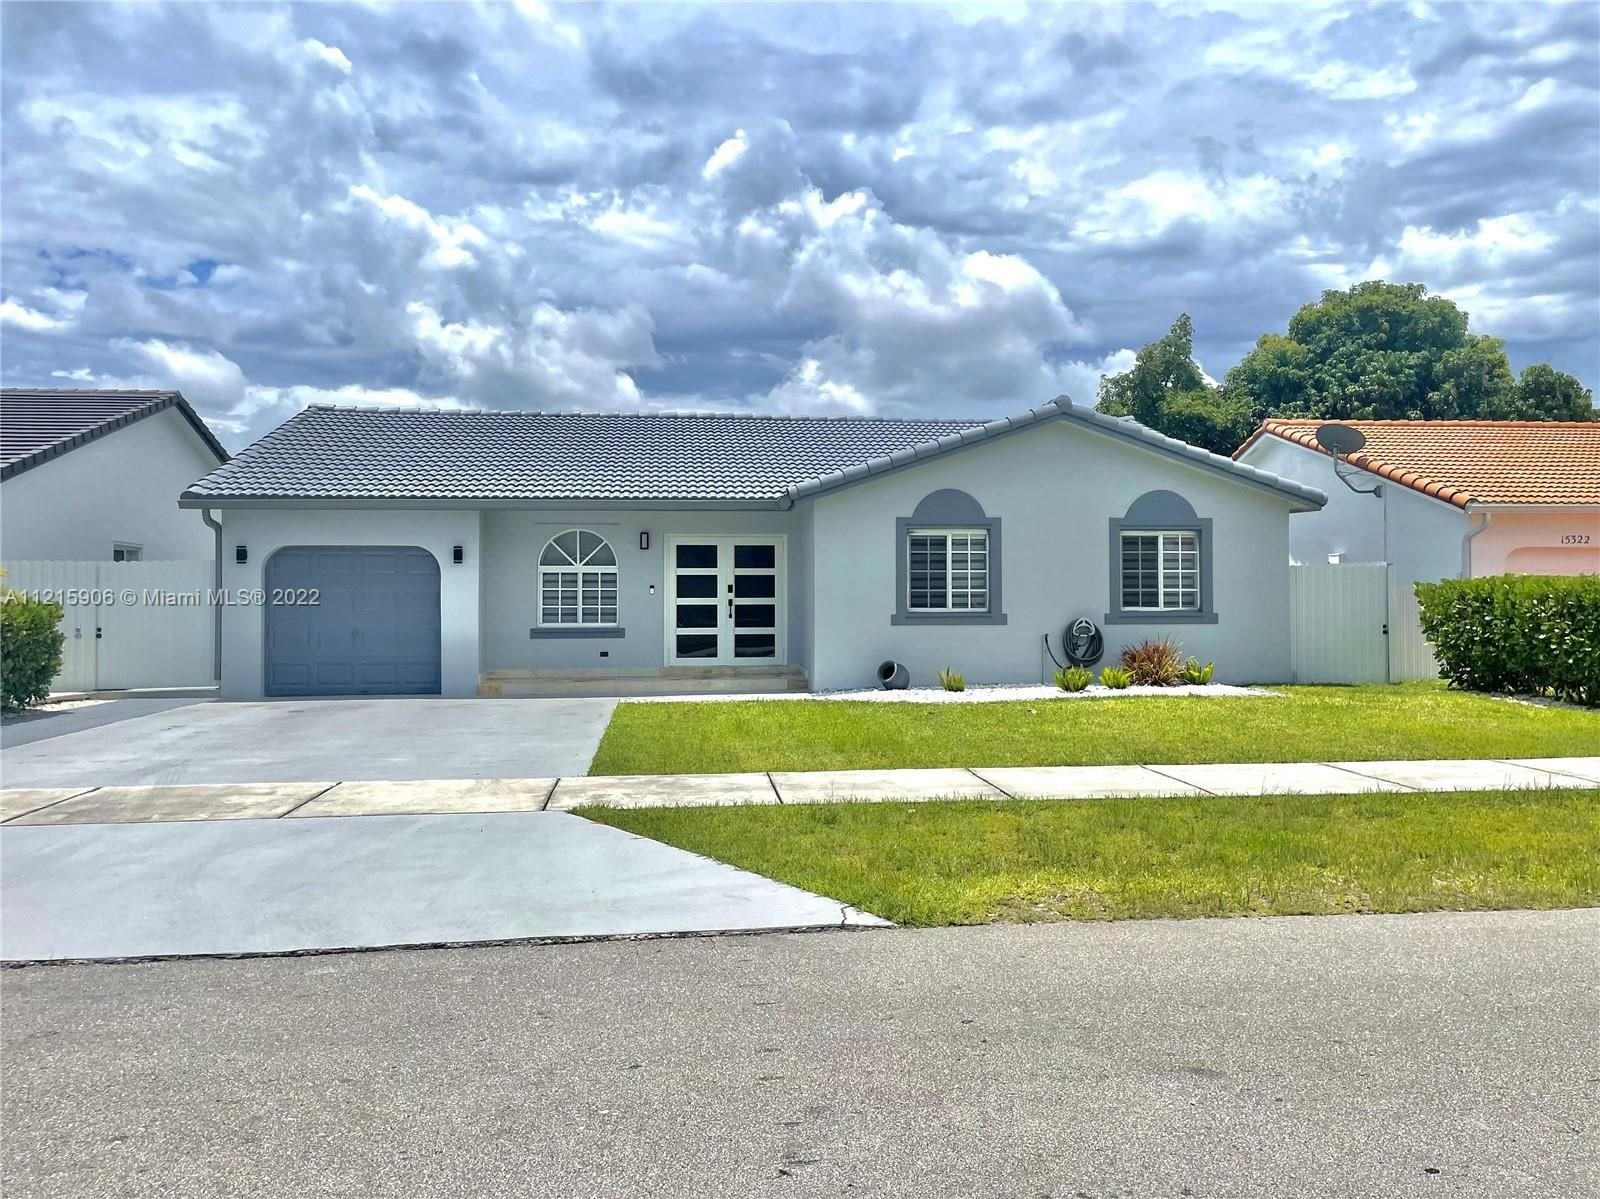 Real estate property located at 15312 177th Ter, Miami-Dade County, Miami, FL